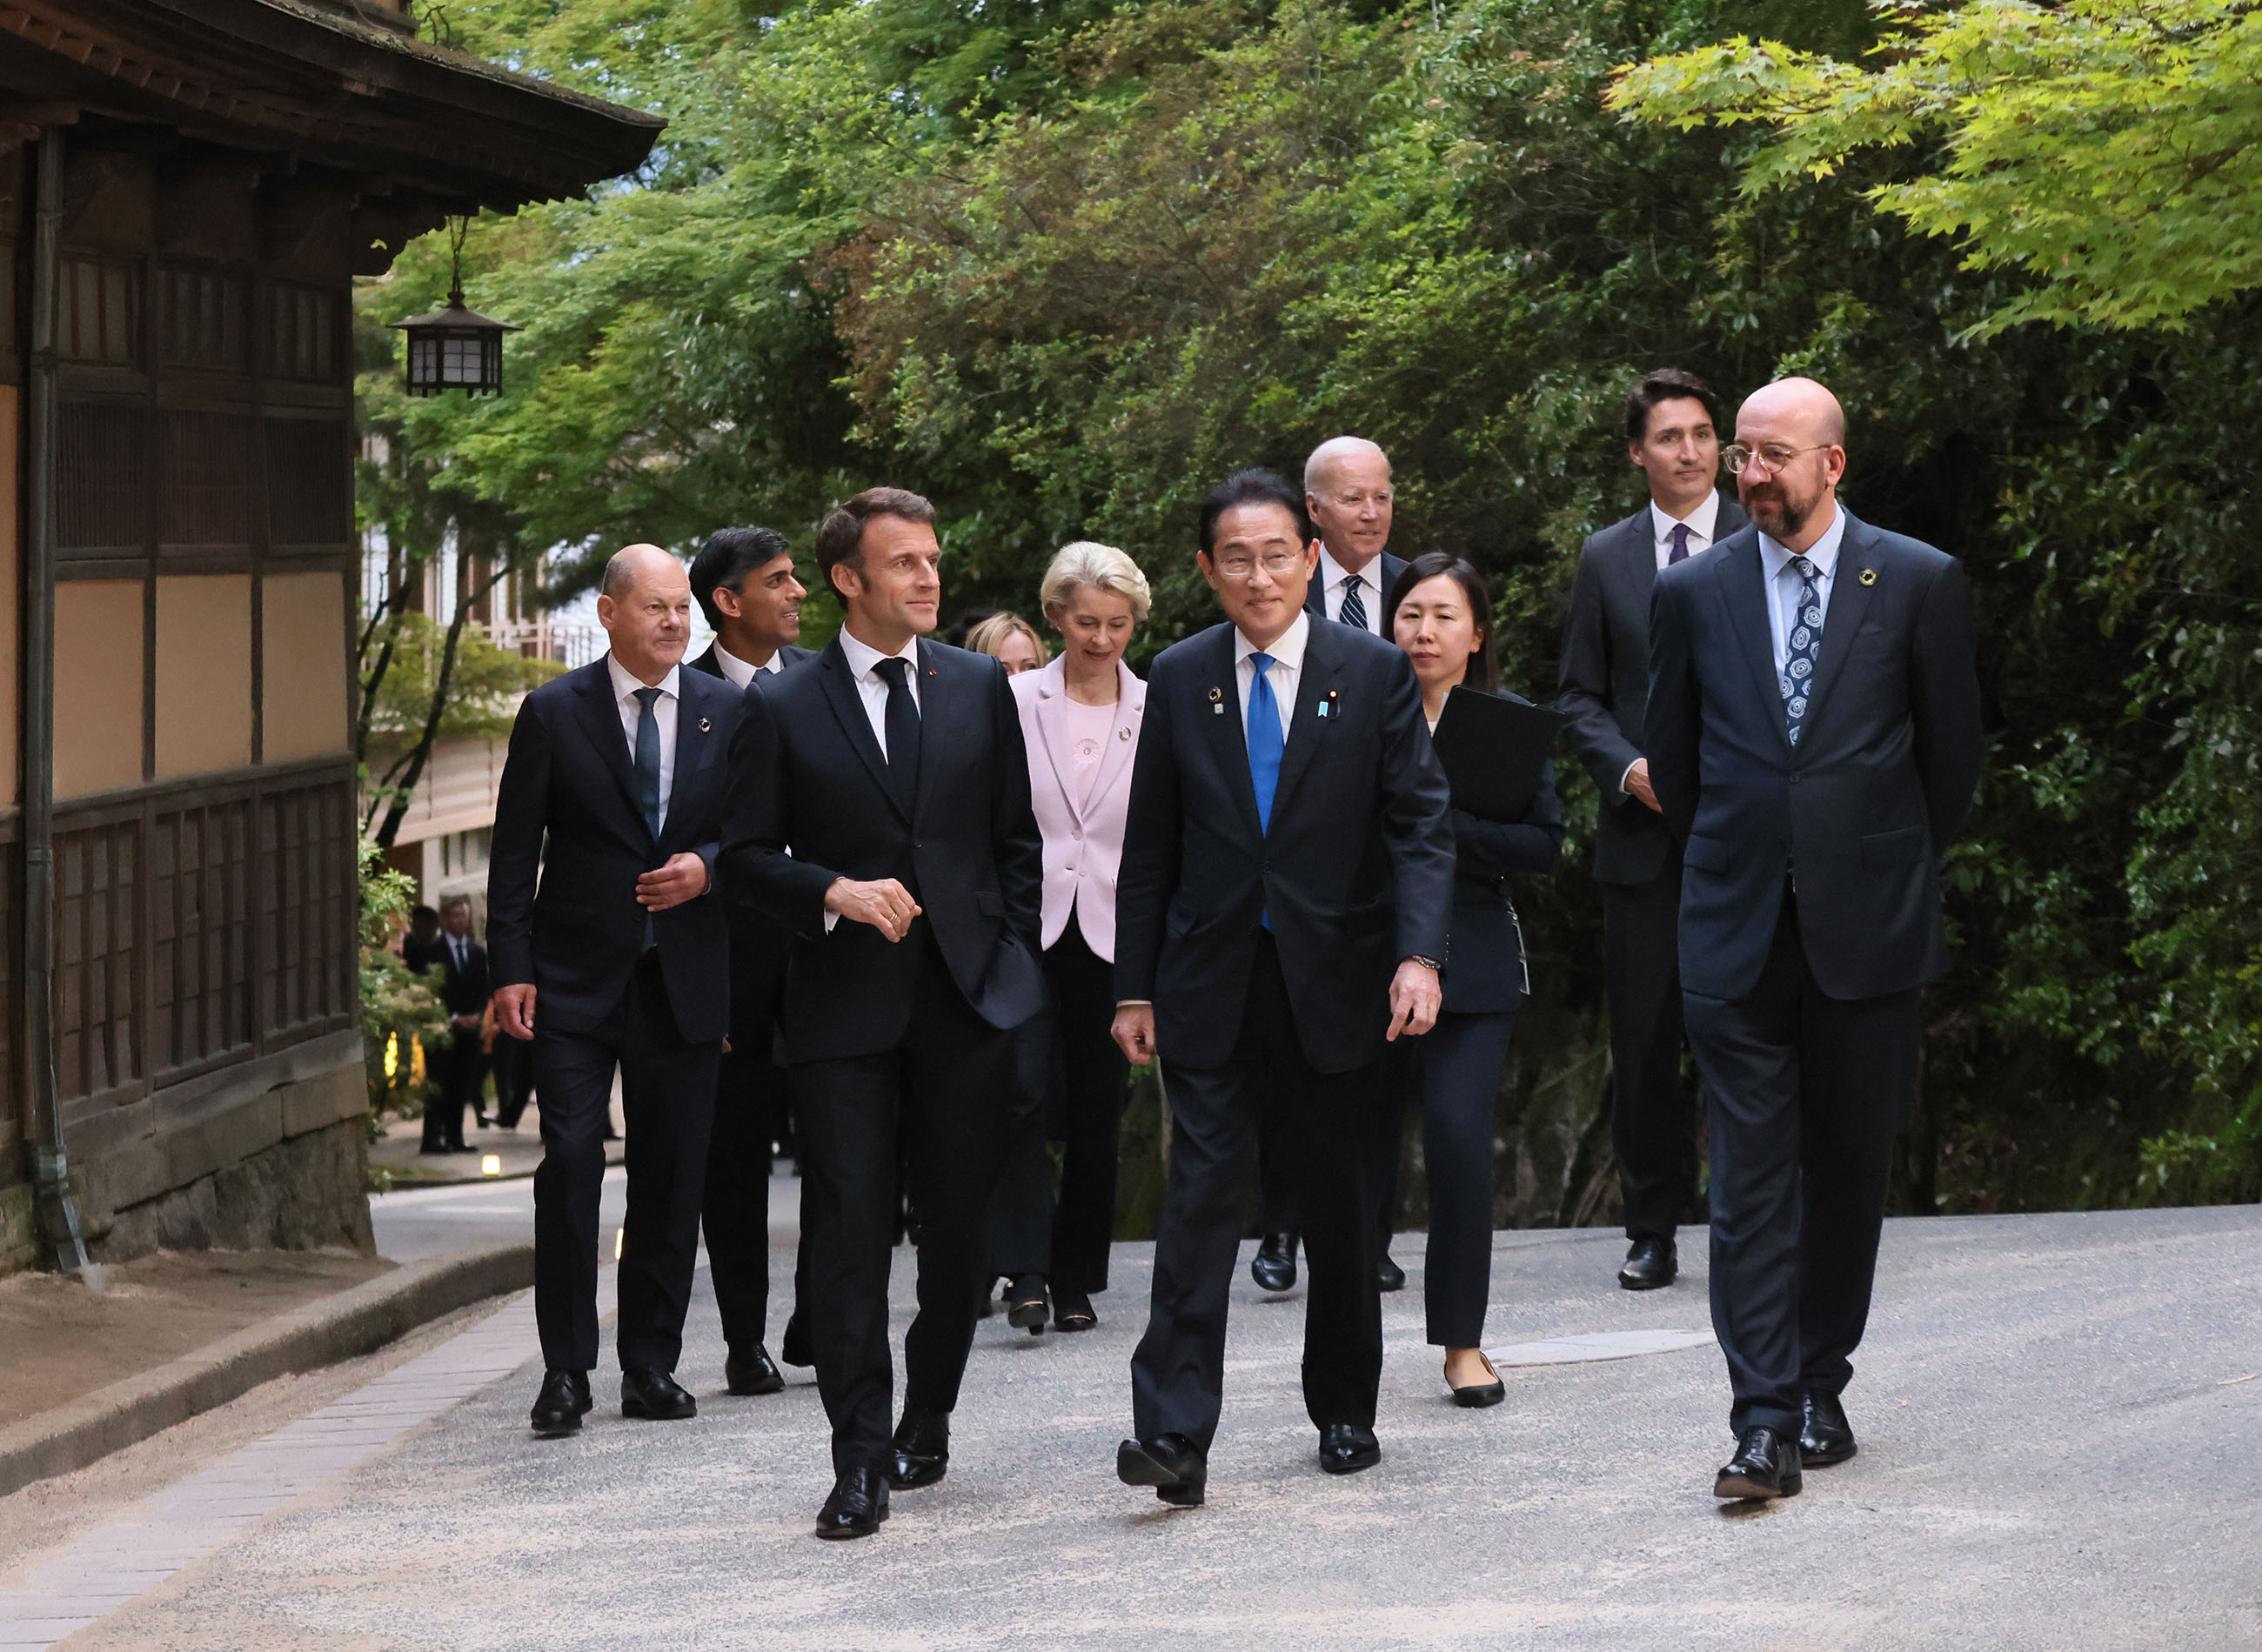 Prime Minister Kishida heading to the Session 3 (working dinner) venue